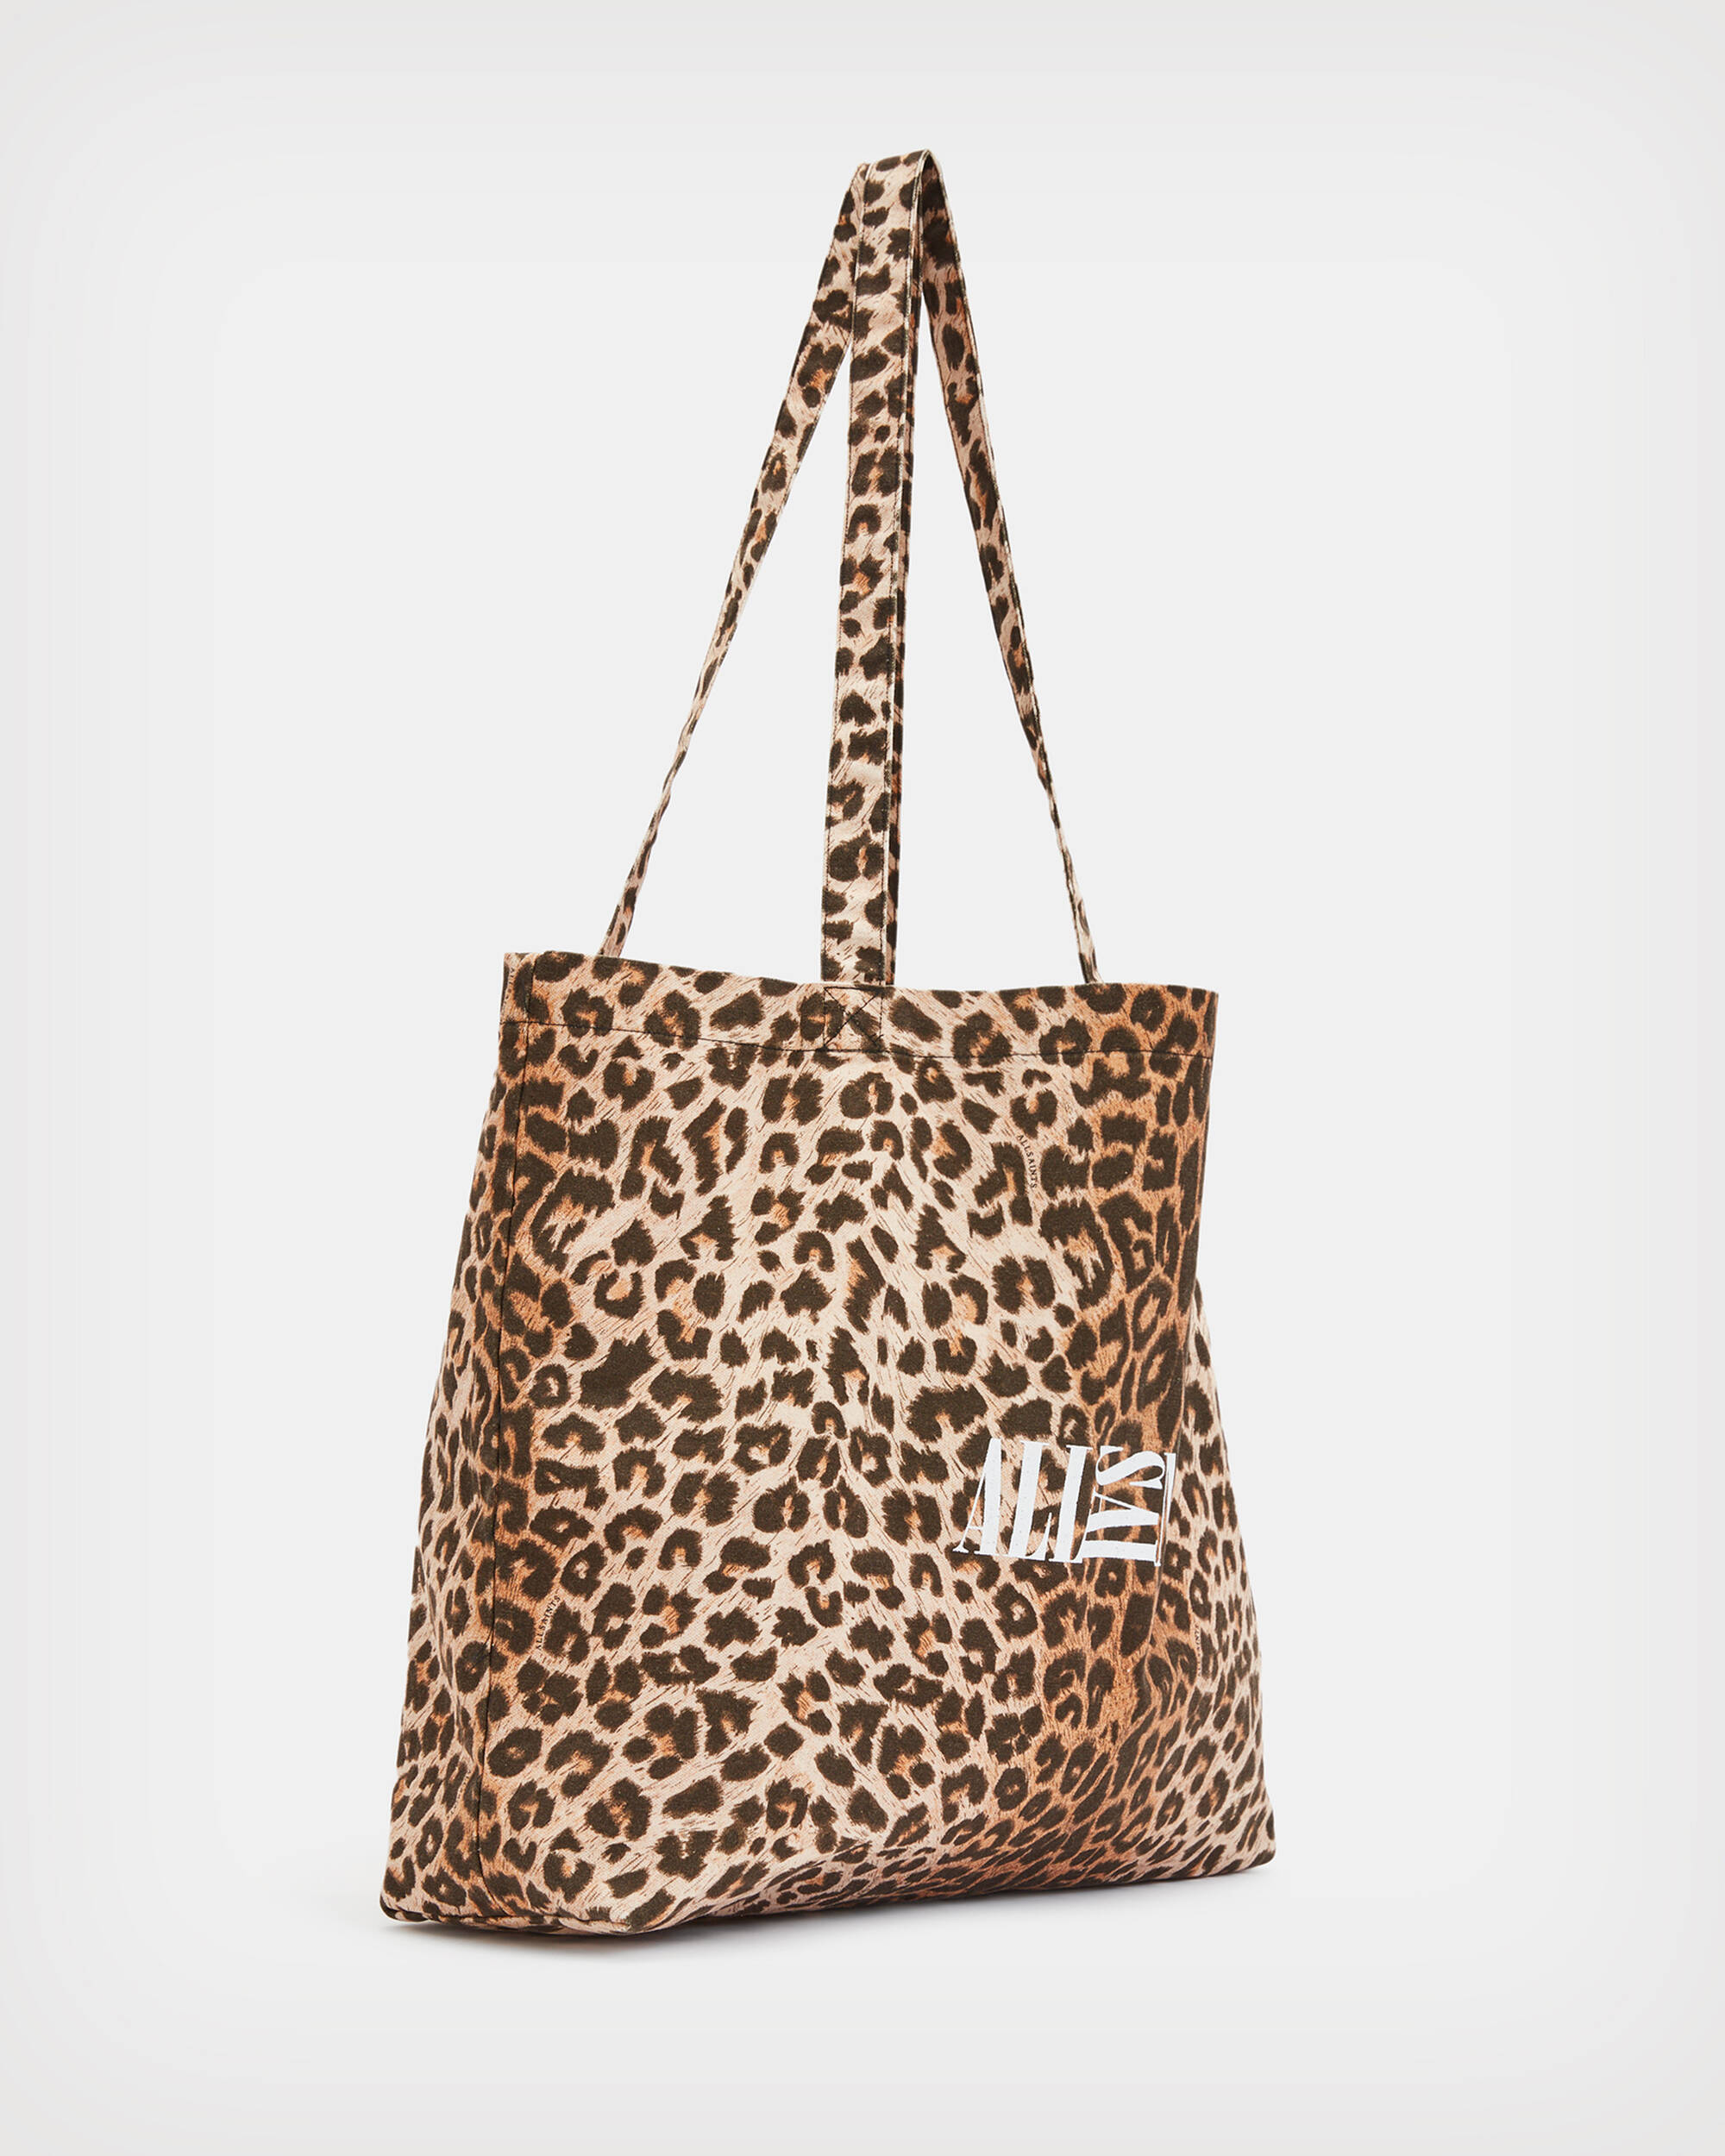 Oppose Leopard Print Tote Bag Brown/Black | ALLSAINTS US